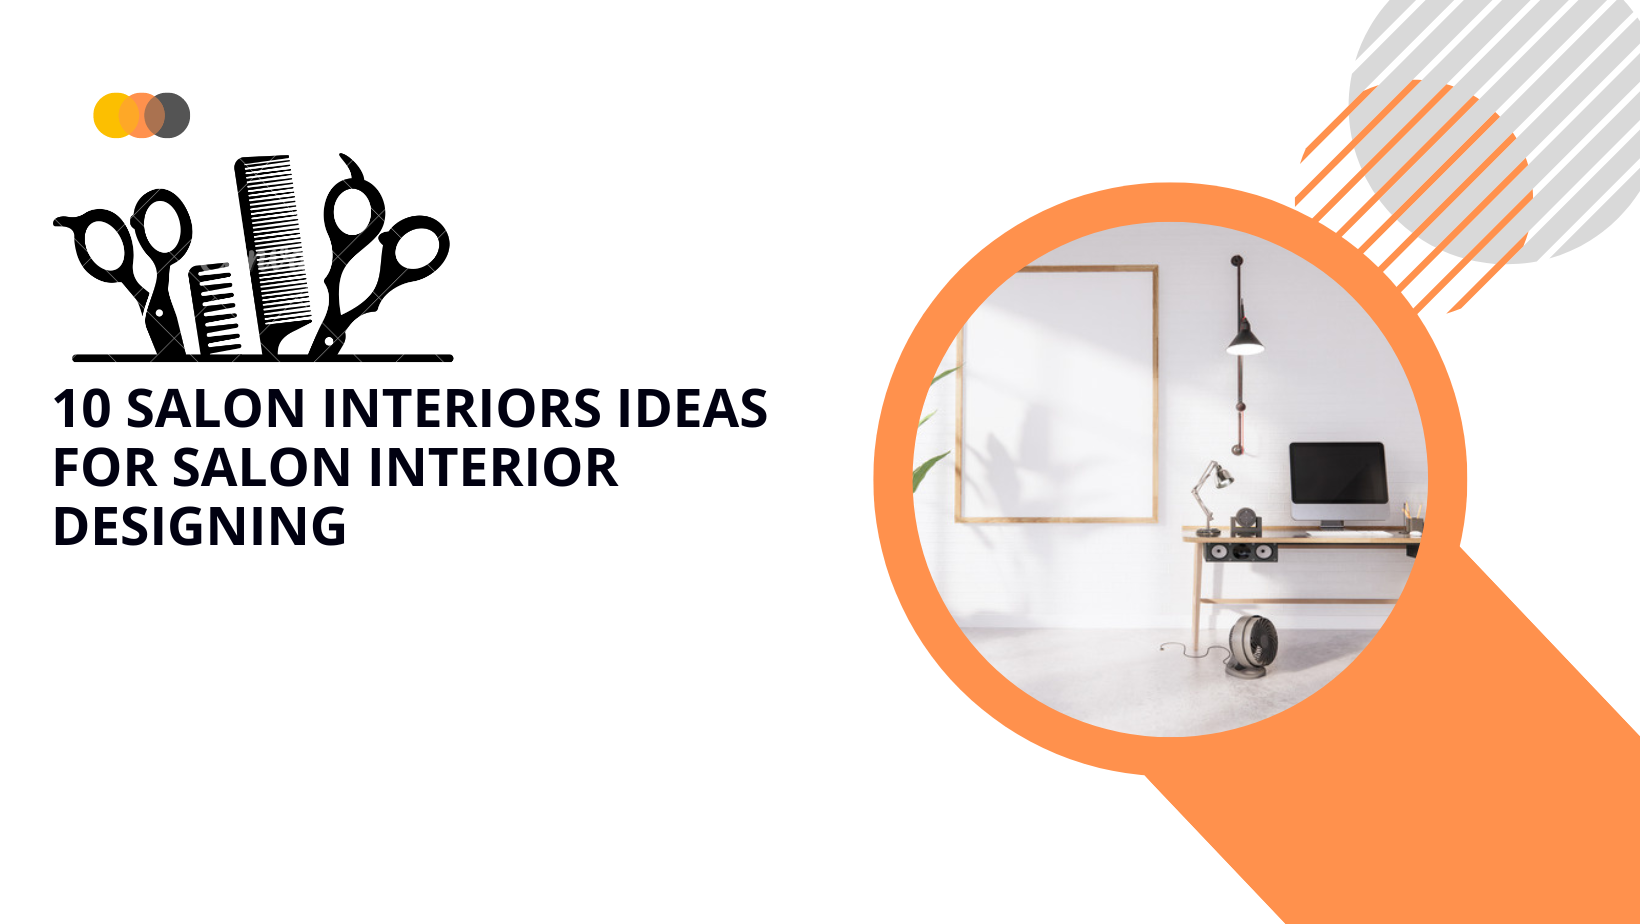 10 Salon Interiors Ideas for Salon Interior Designing